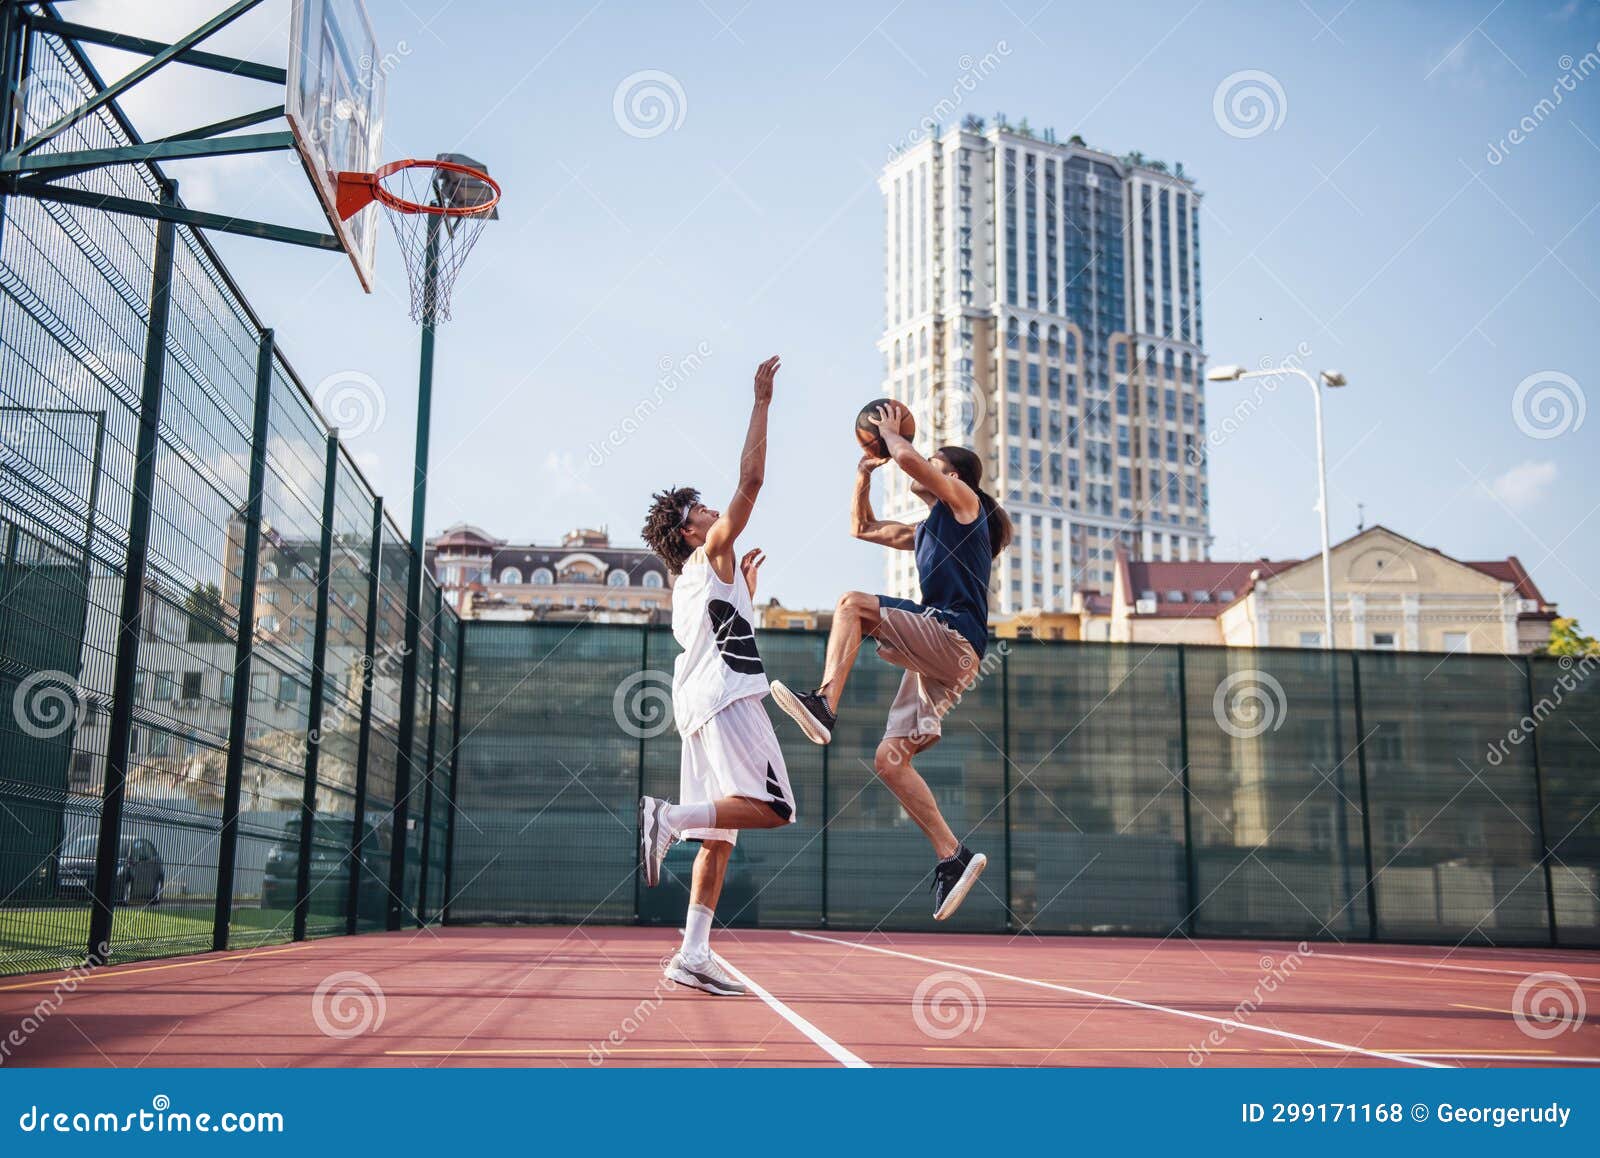 Guys playing basketball stock photo. Image of cityscape - 299171168